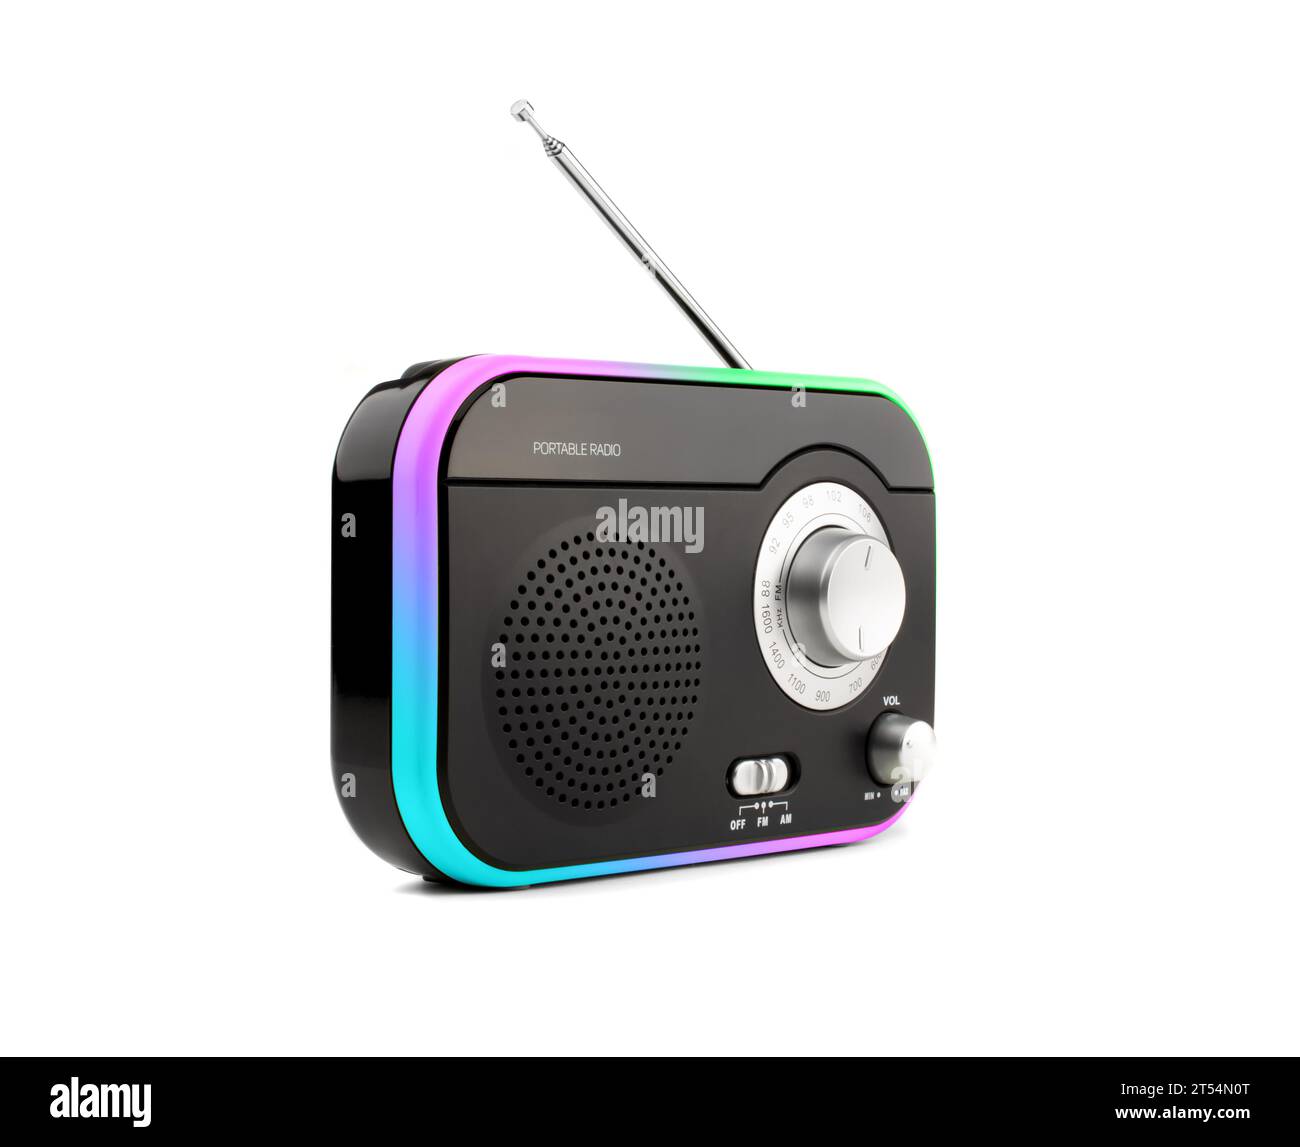 Color portable radio on white background Stock Photo